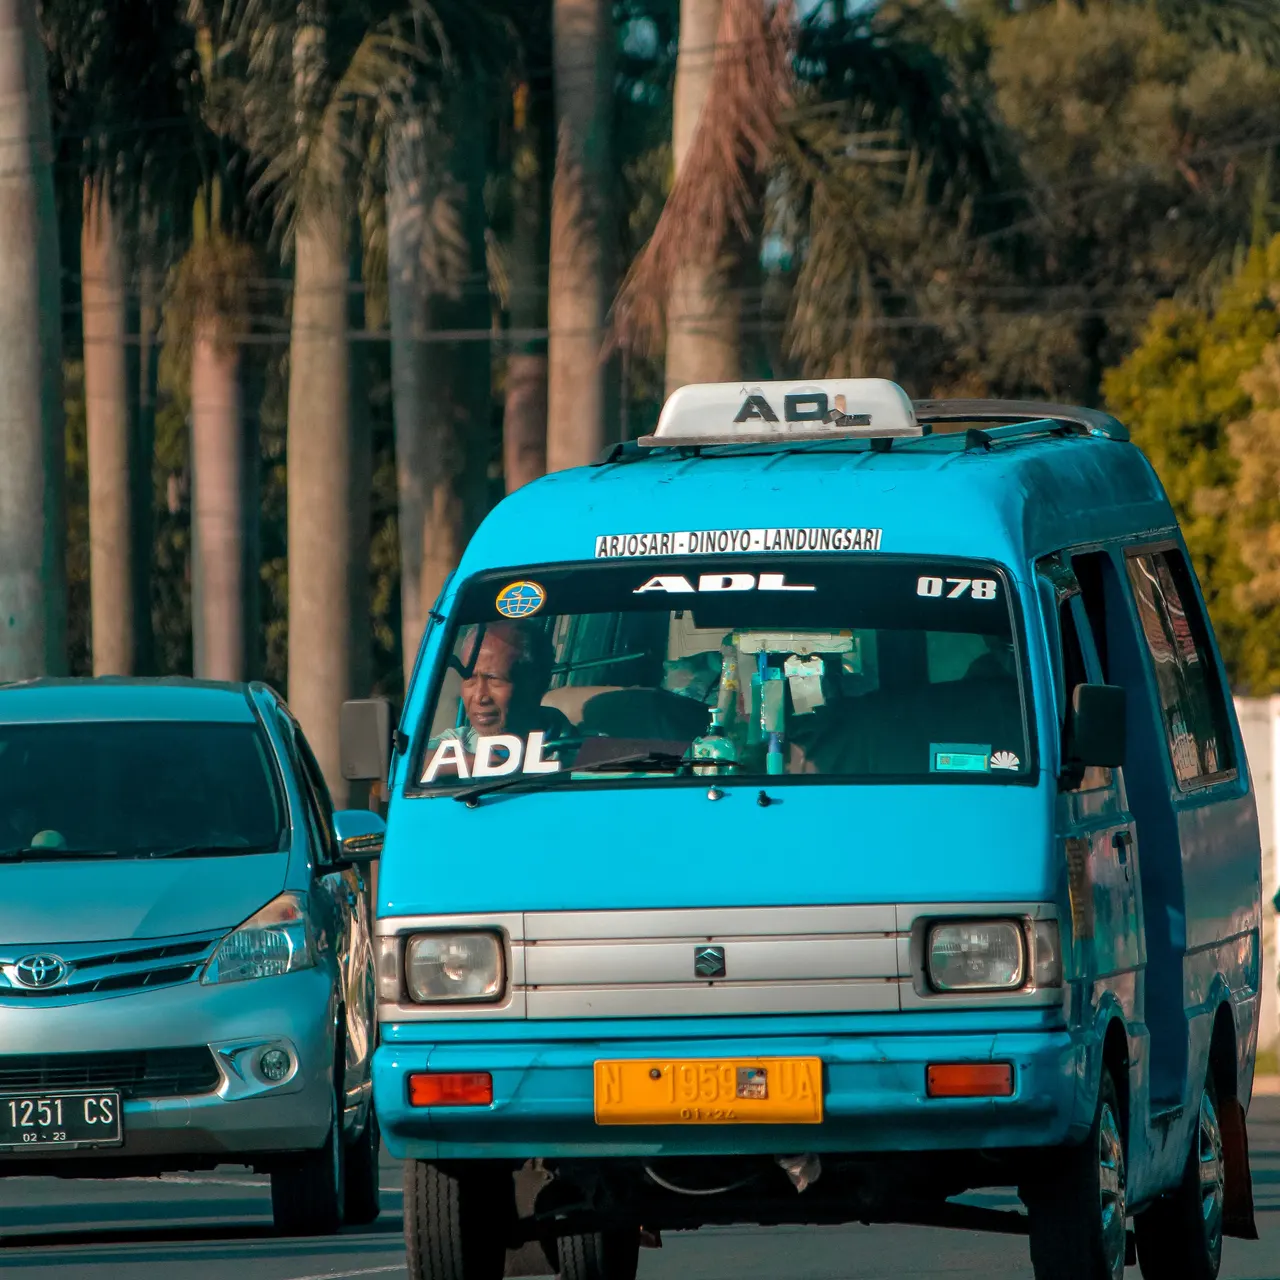 Malang City Transportation ADL. Photo by Aldrin Rachman Pradana on Unsplash